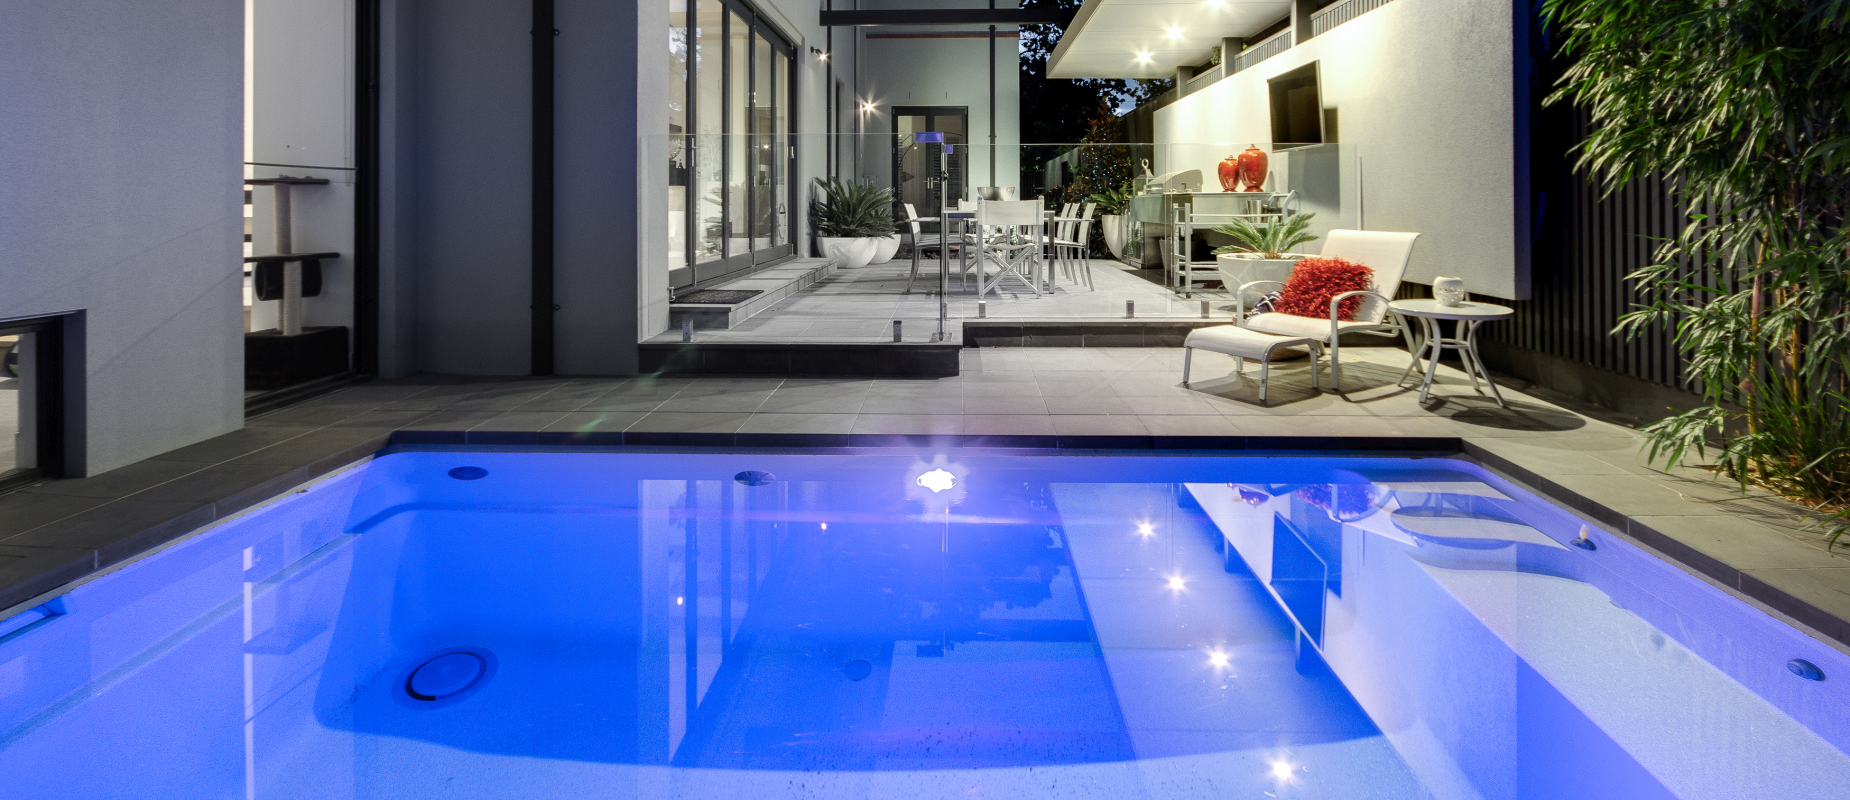 Compass-Pools-Australia_Plunge-Courtyard_Beautiful-pool-design-idea-for-small-backyard